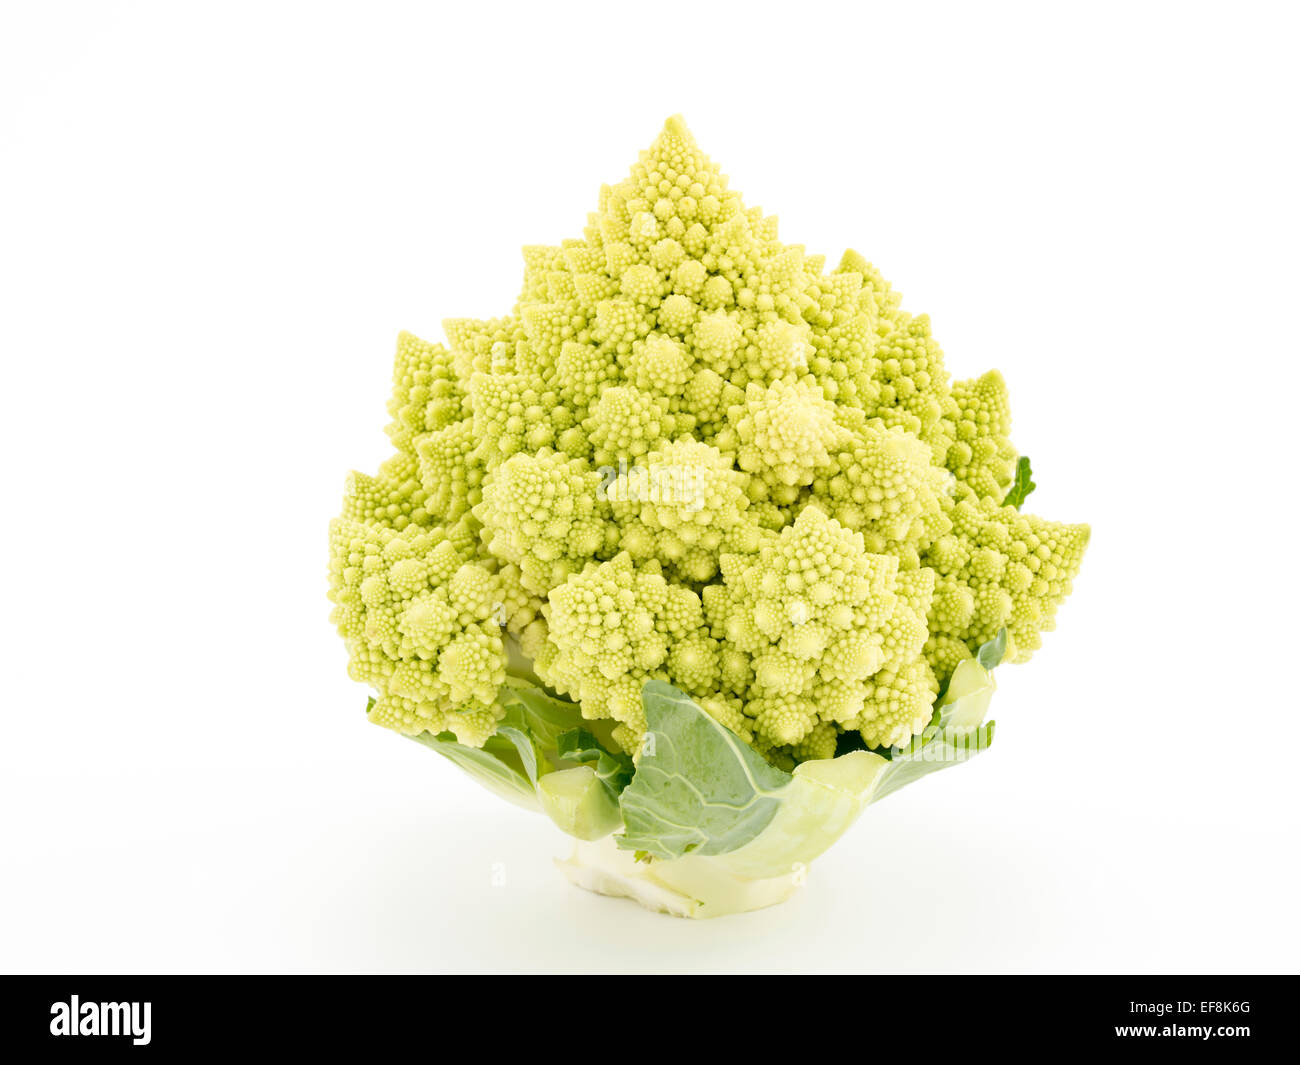 Romanesco aka Romanesque cauliflower or Romanesco broccoli - edible flower bud of Brassica oleracea. Stock Photo